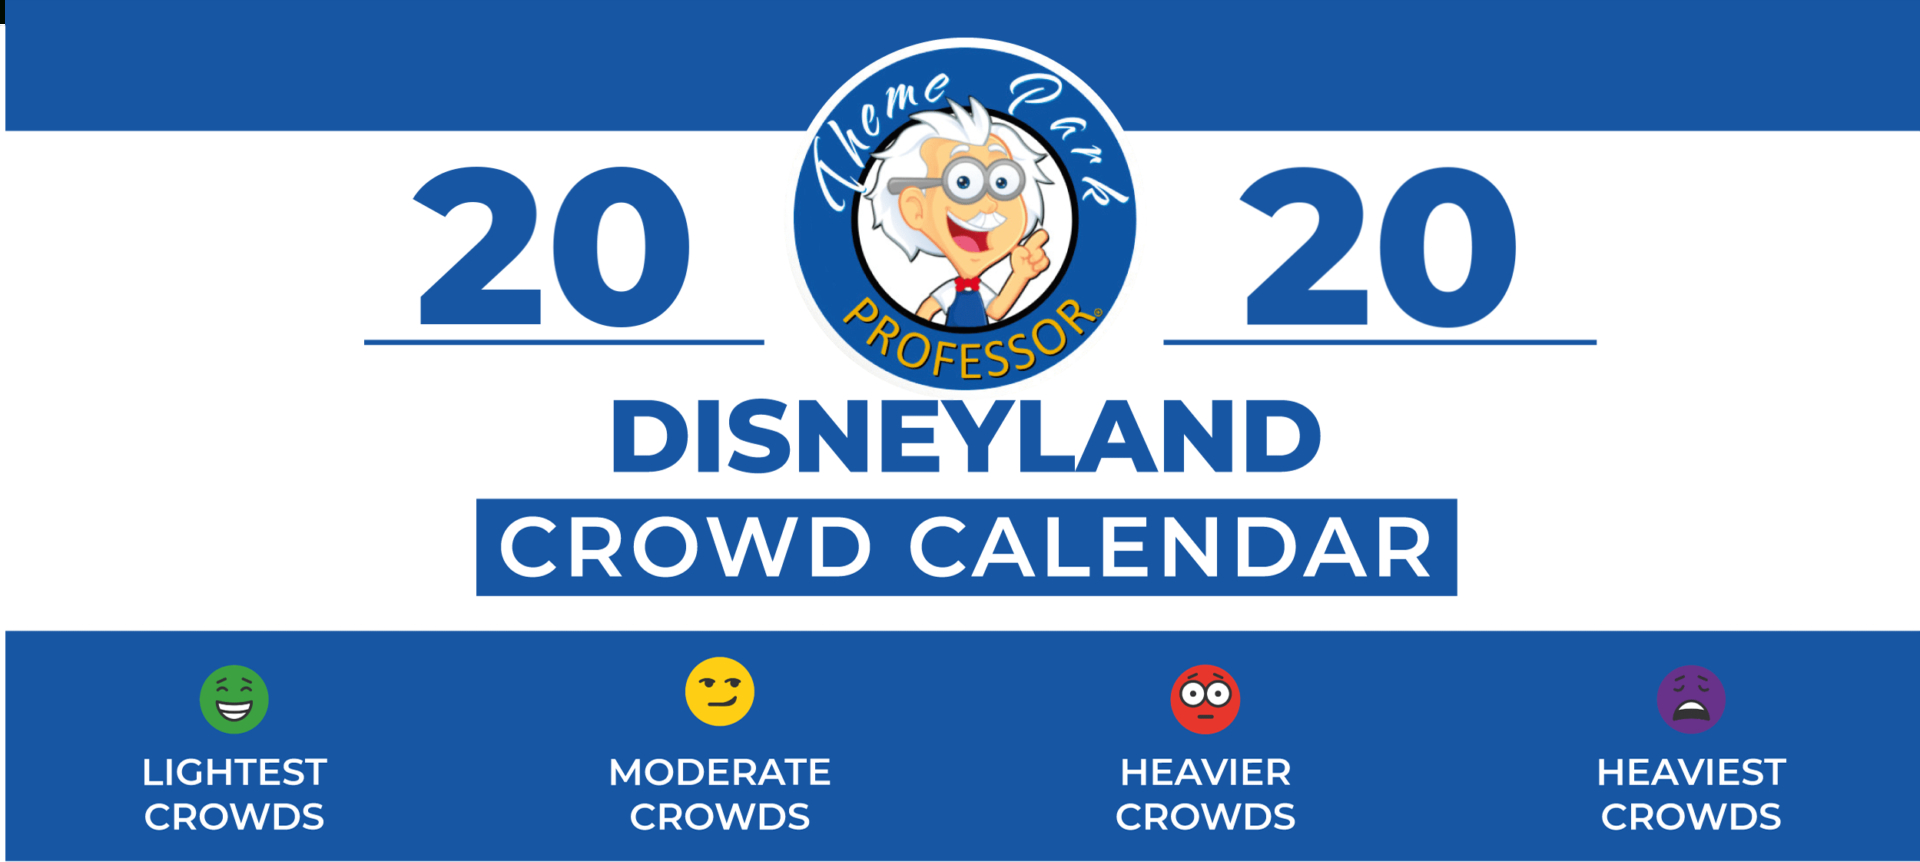 Disneyland Crowd Calendar - Theme Park Professor-Disney World Crowd Calendar 2022 By Park